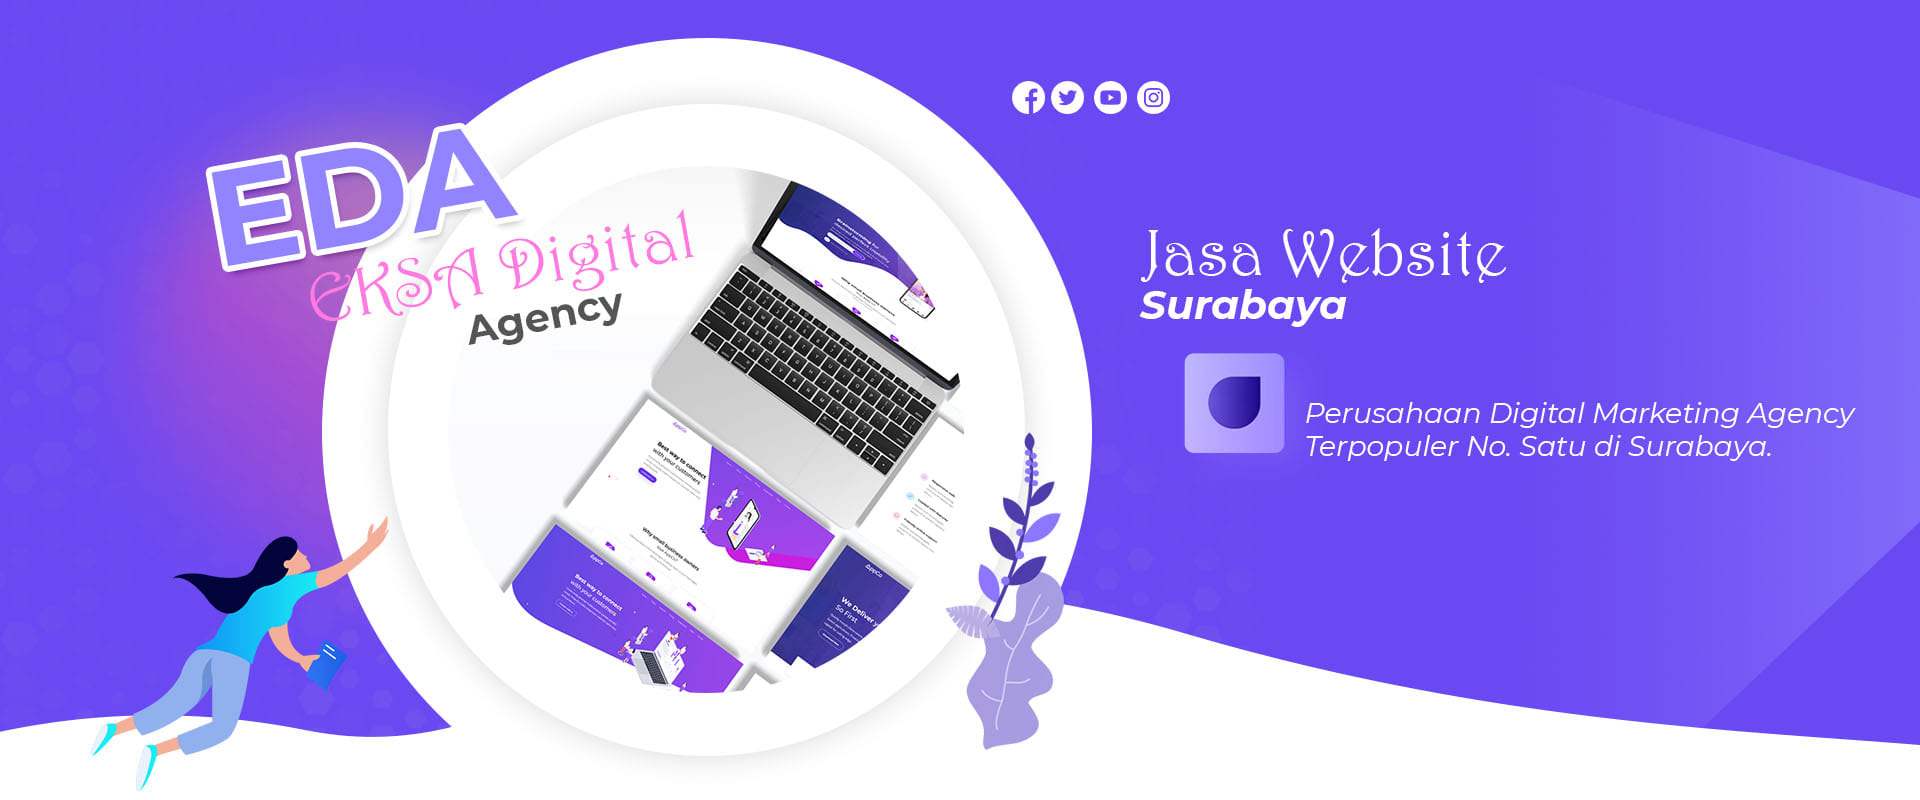 Jasa Website Surabaya